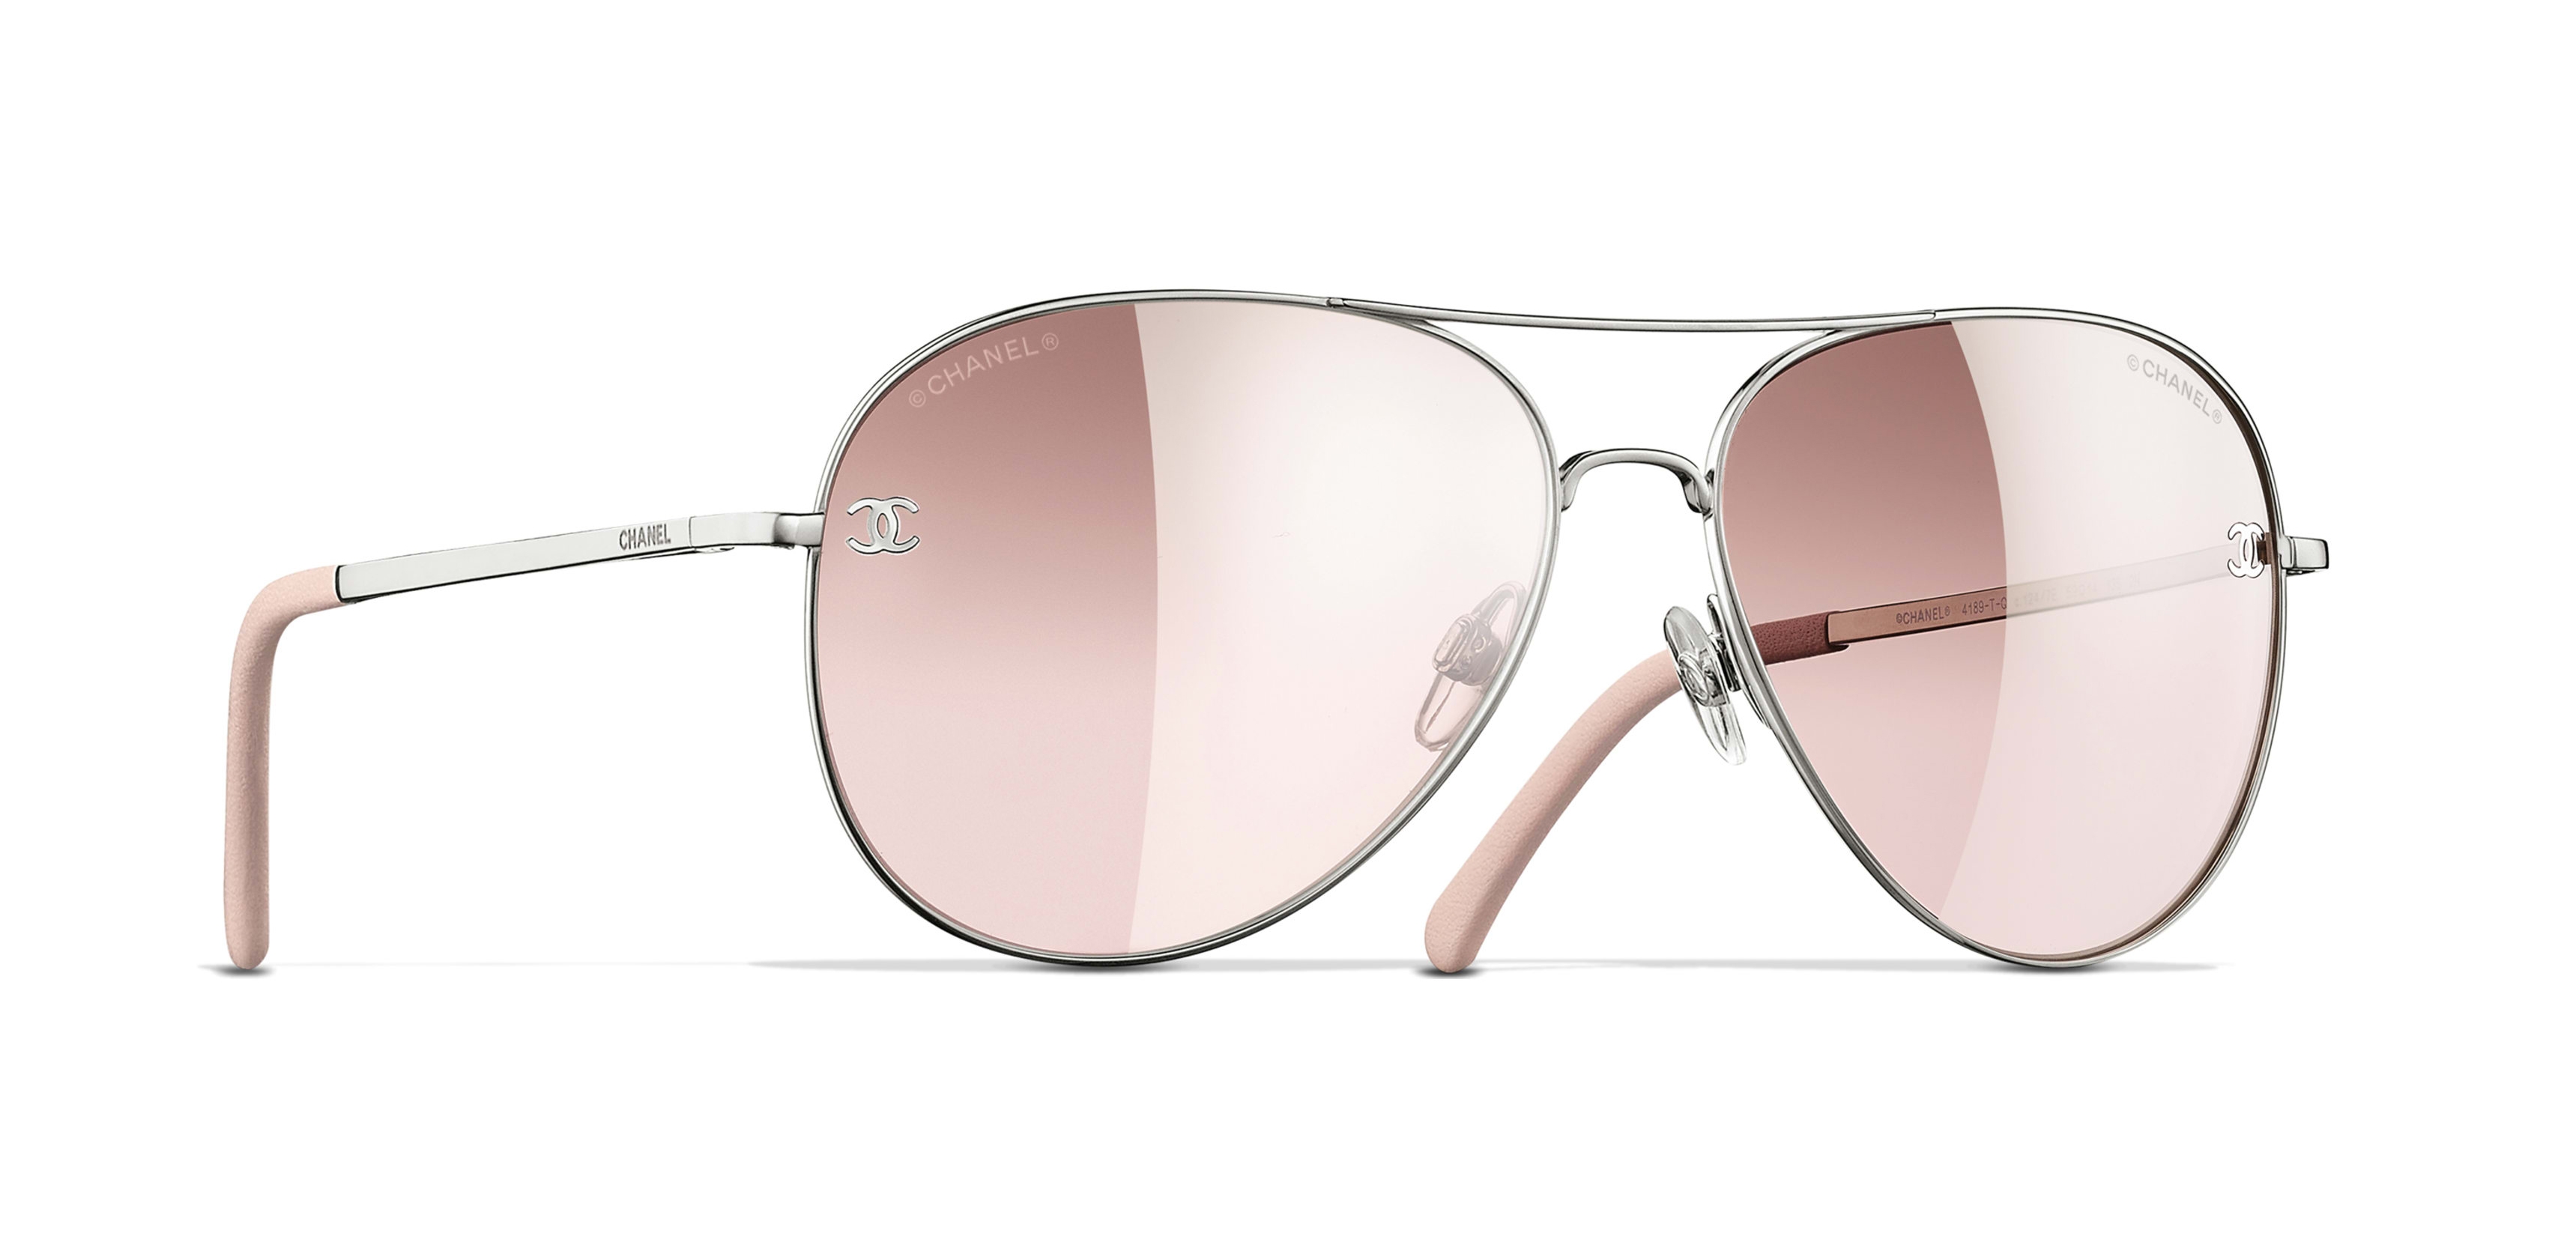 chanel 5230 q pink sunglasses